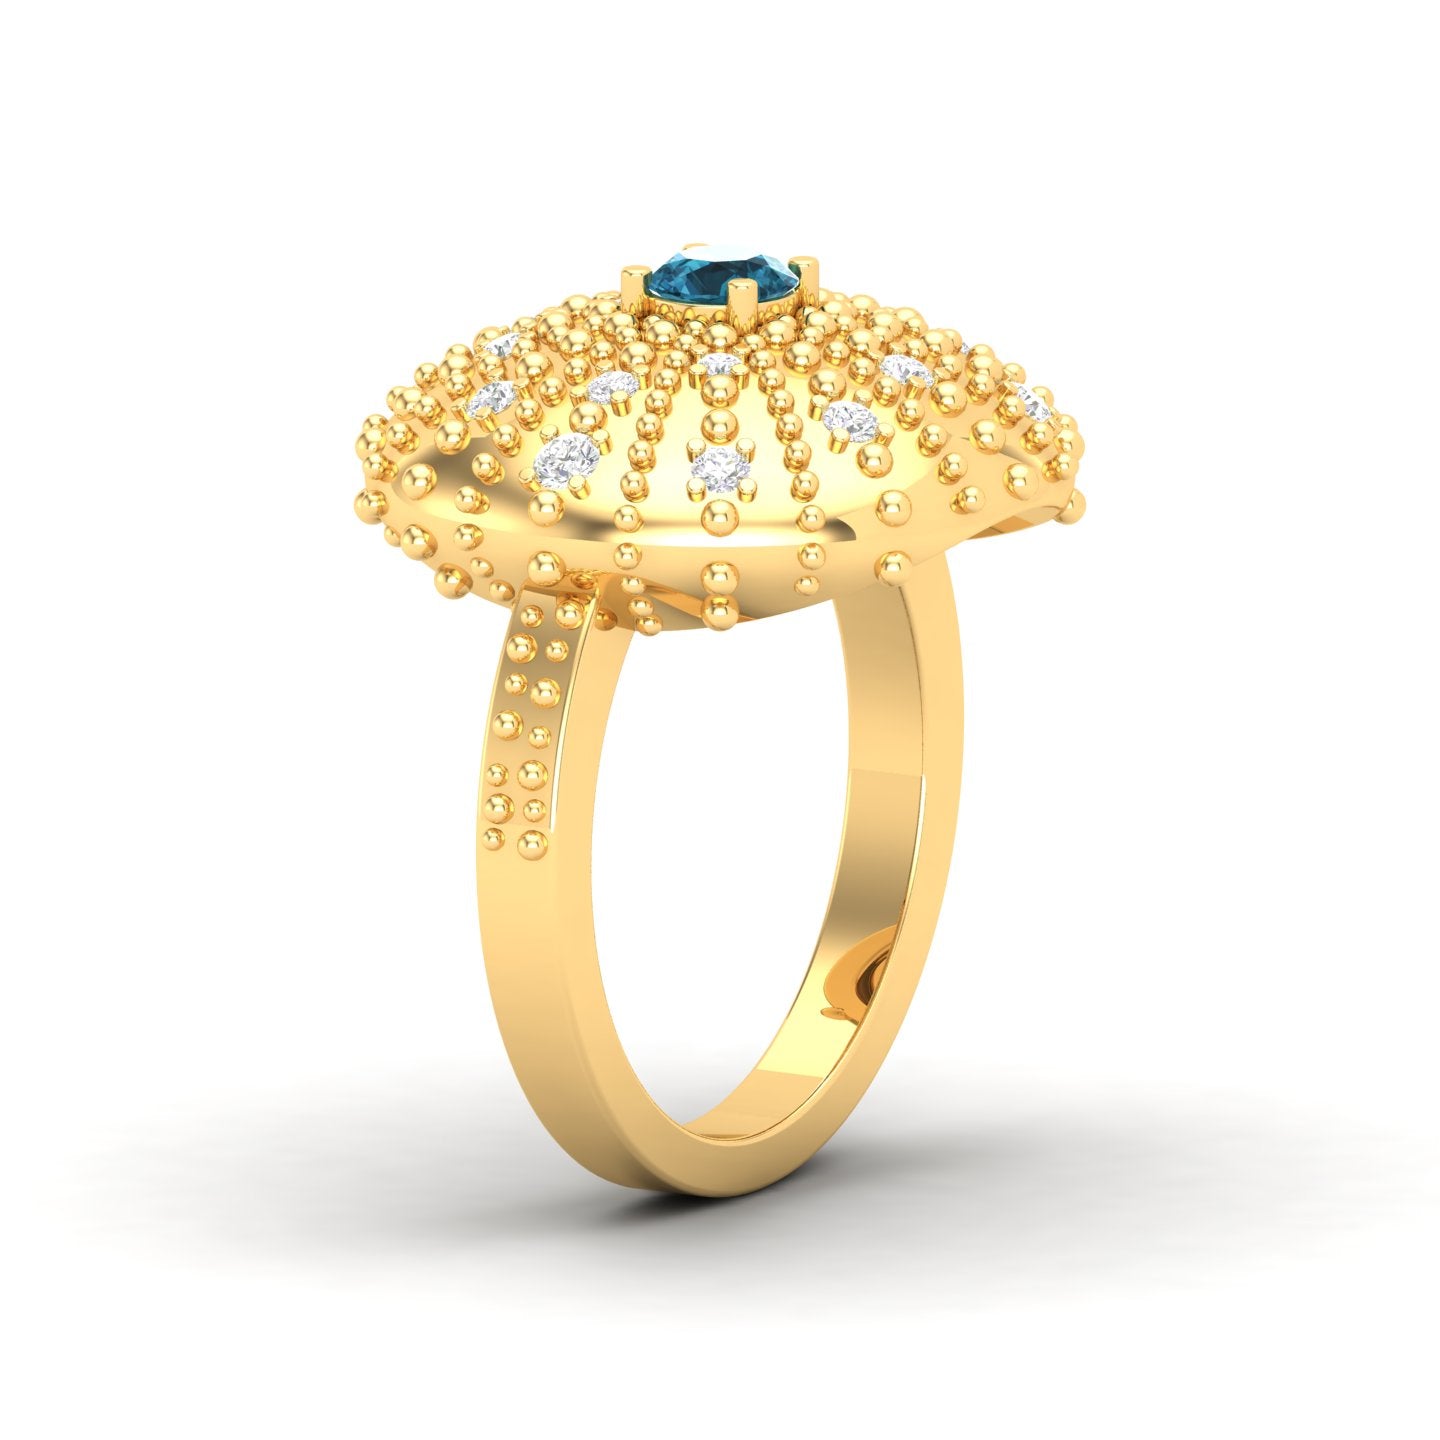 Maurya Desert London Blue Topaz Cocktail Ring with Scattered Diamonds